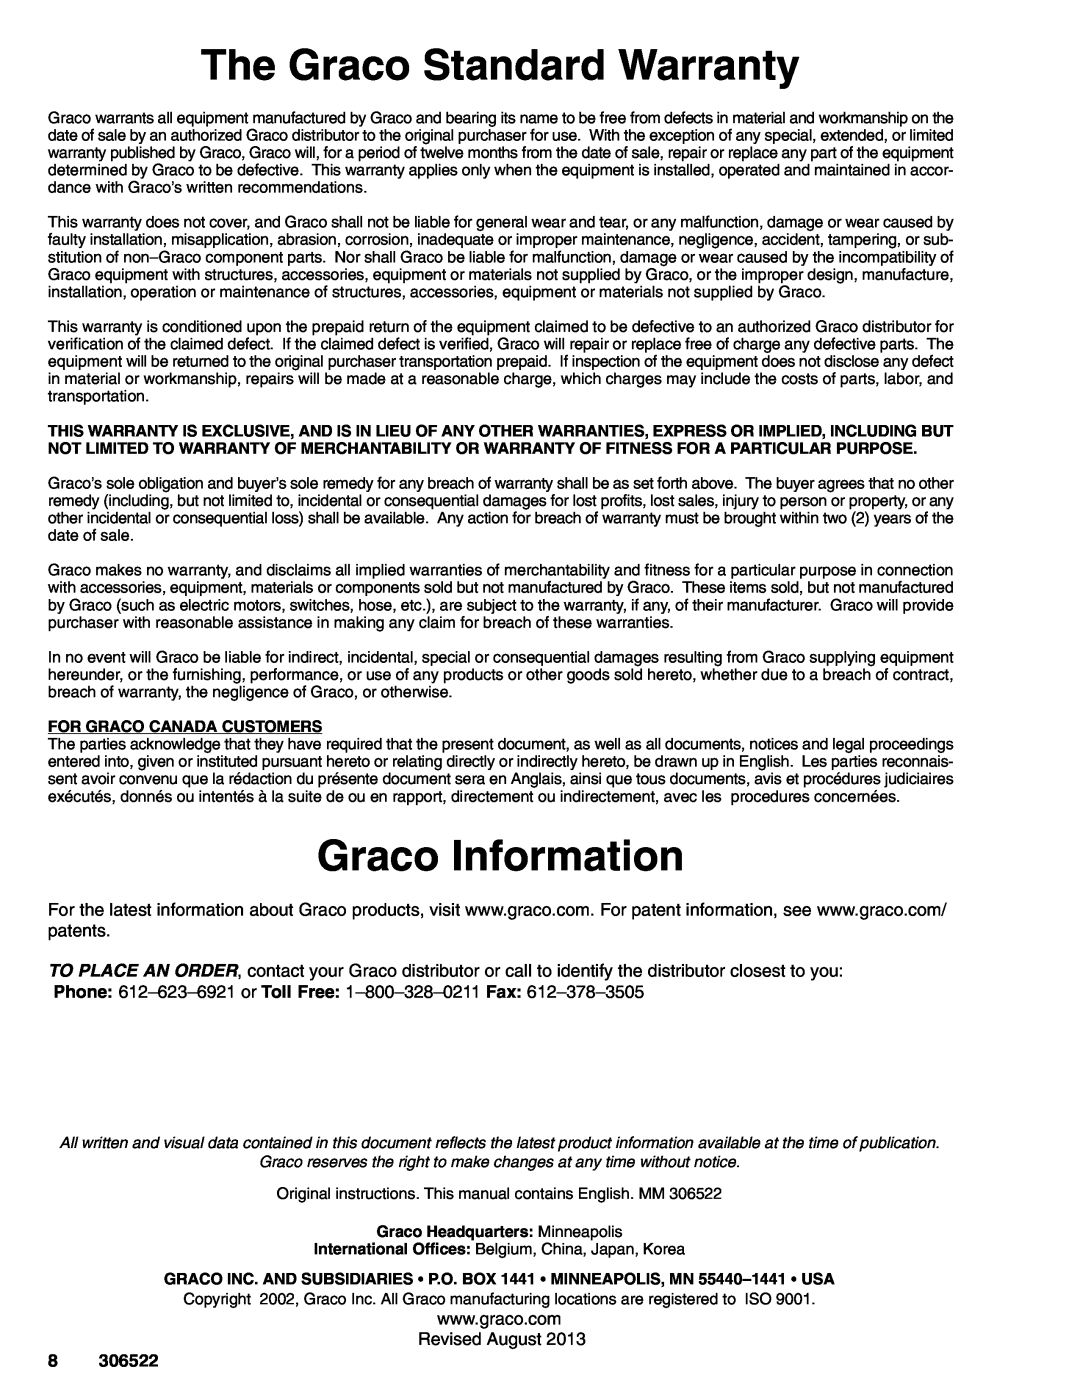 Graco 204124 The Graco Standard Warranty, Graco Information, For Graco Canada Customers, Graco Headquarters Minneapolis 